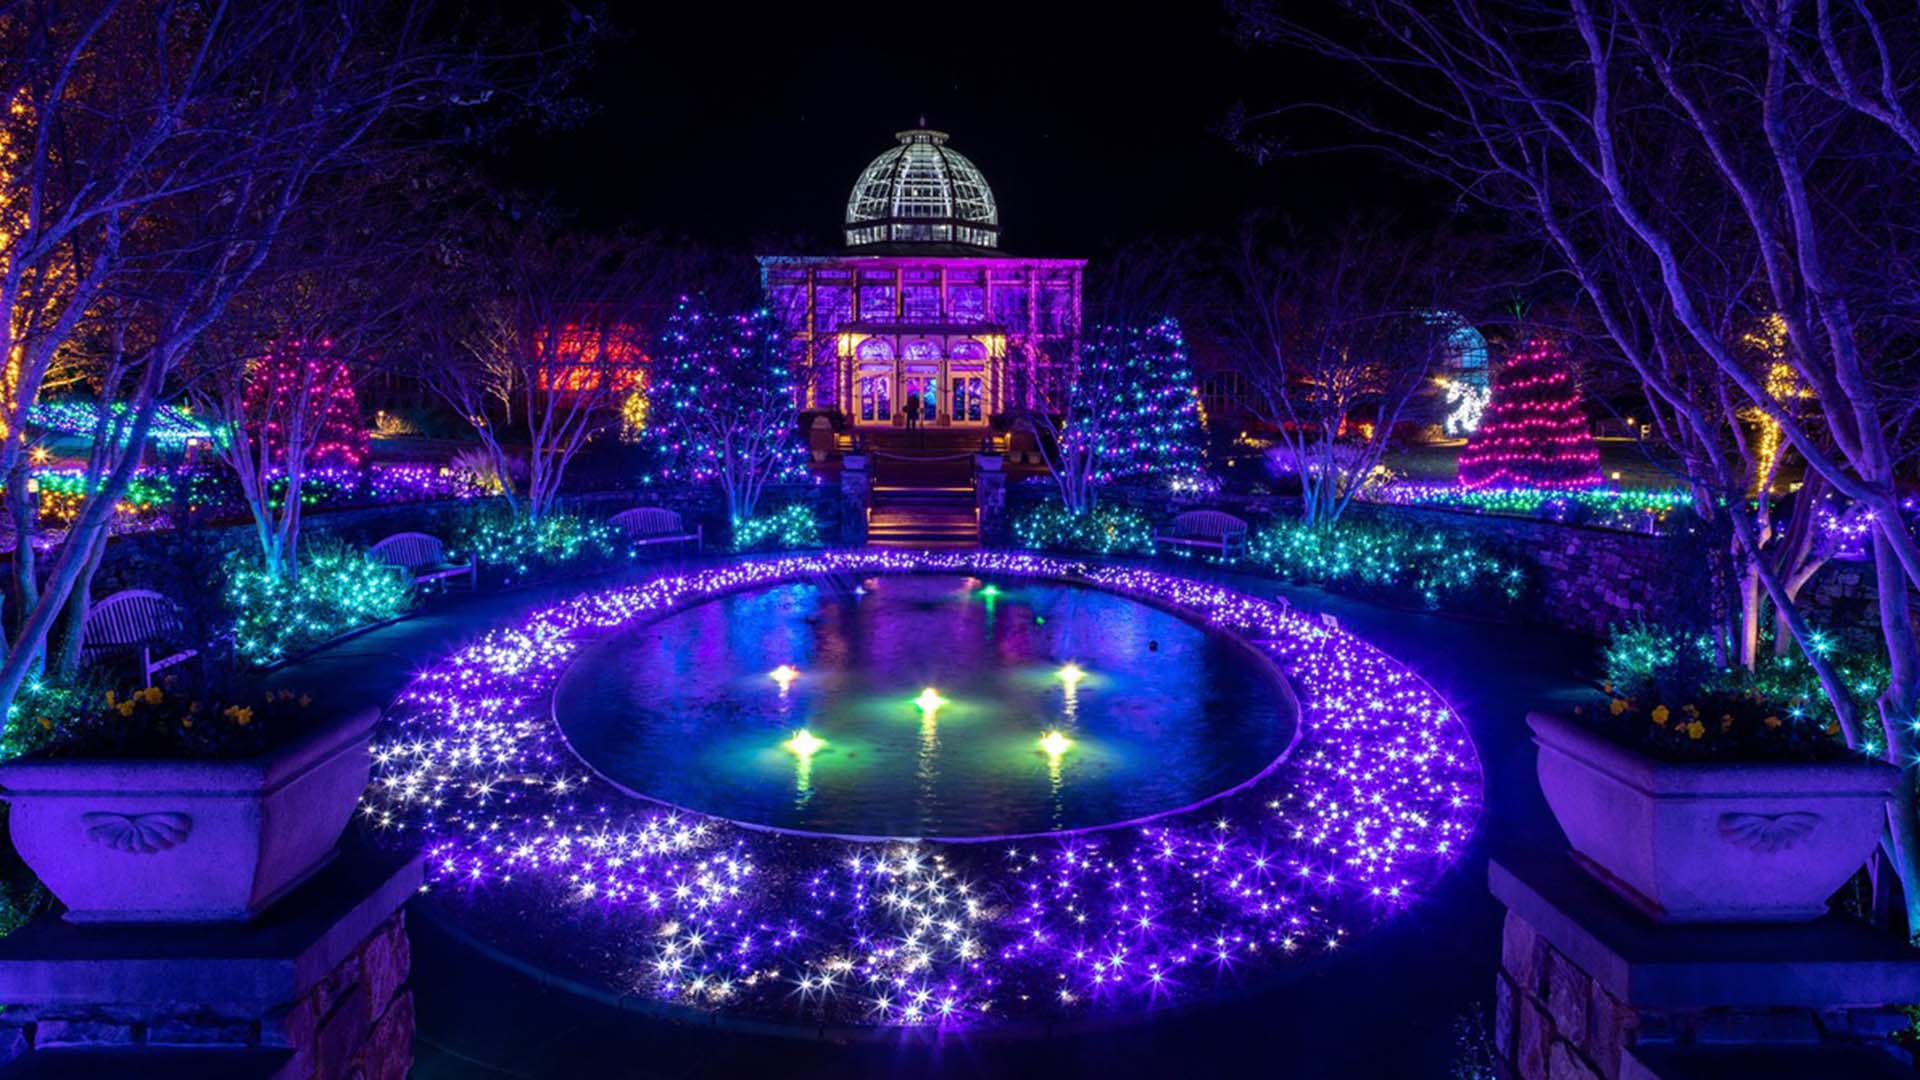 Lewis Ginter Botanical Garden during the 2022 holiday season